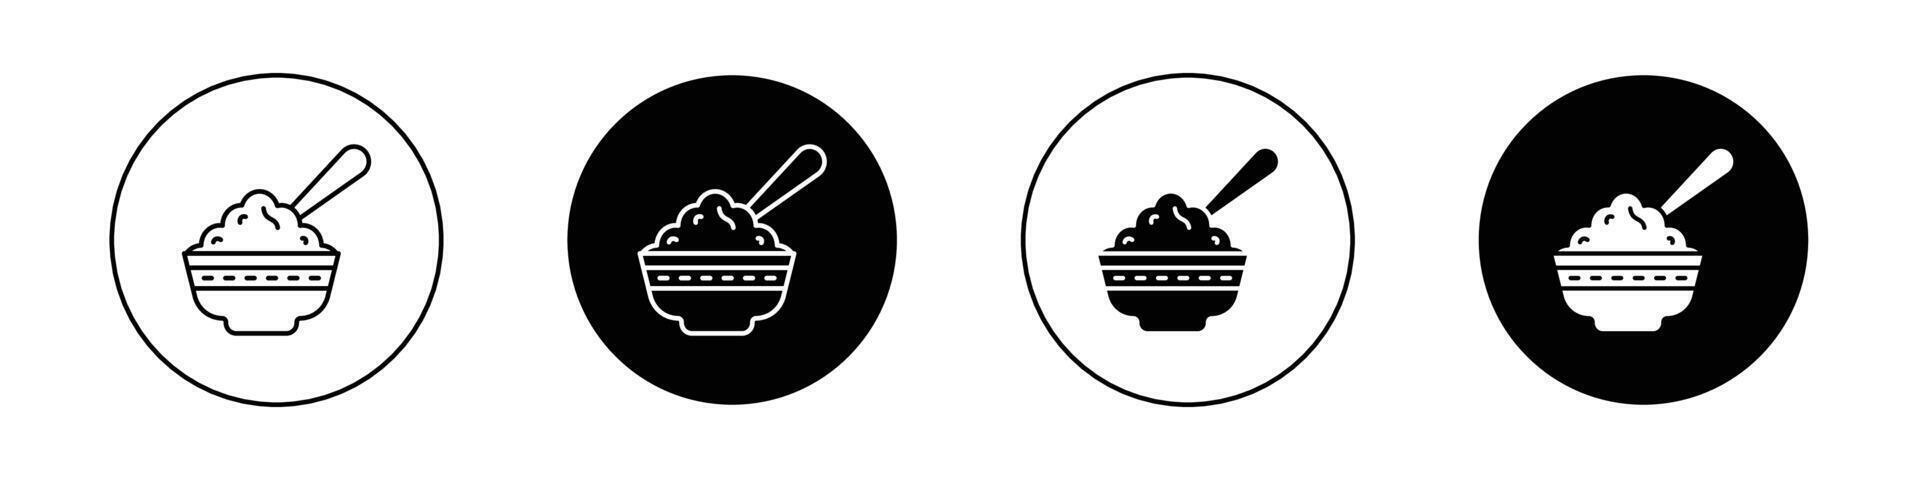 Rice bowl icon vector